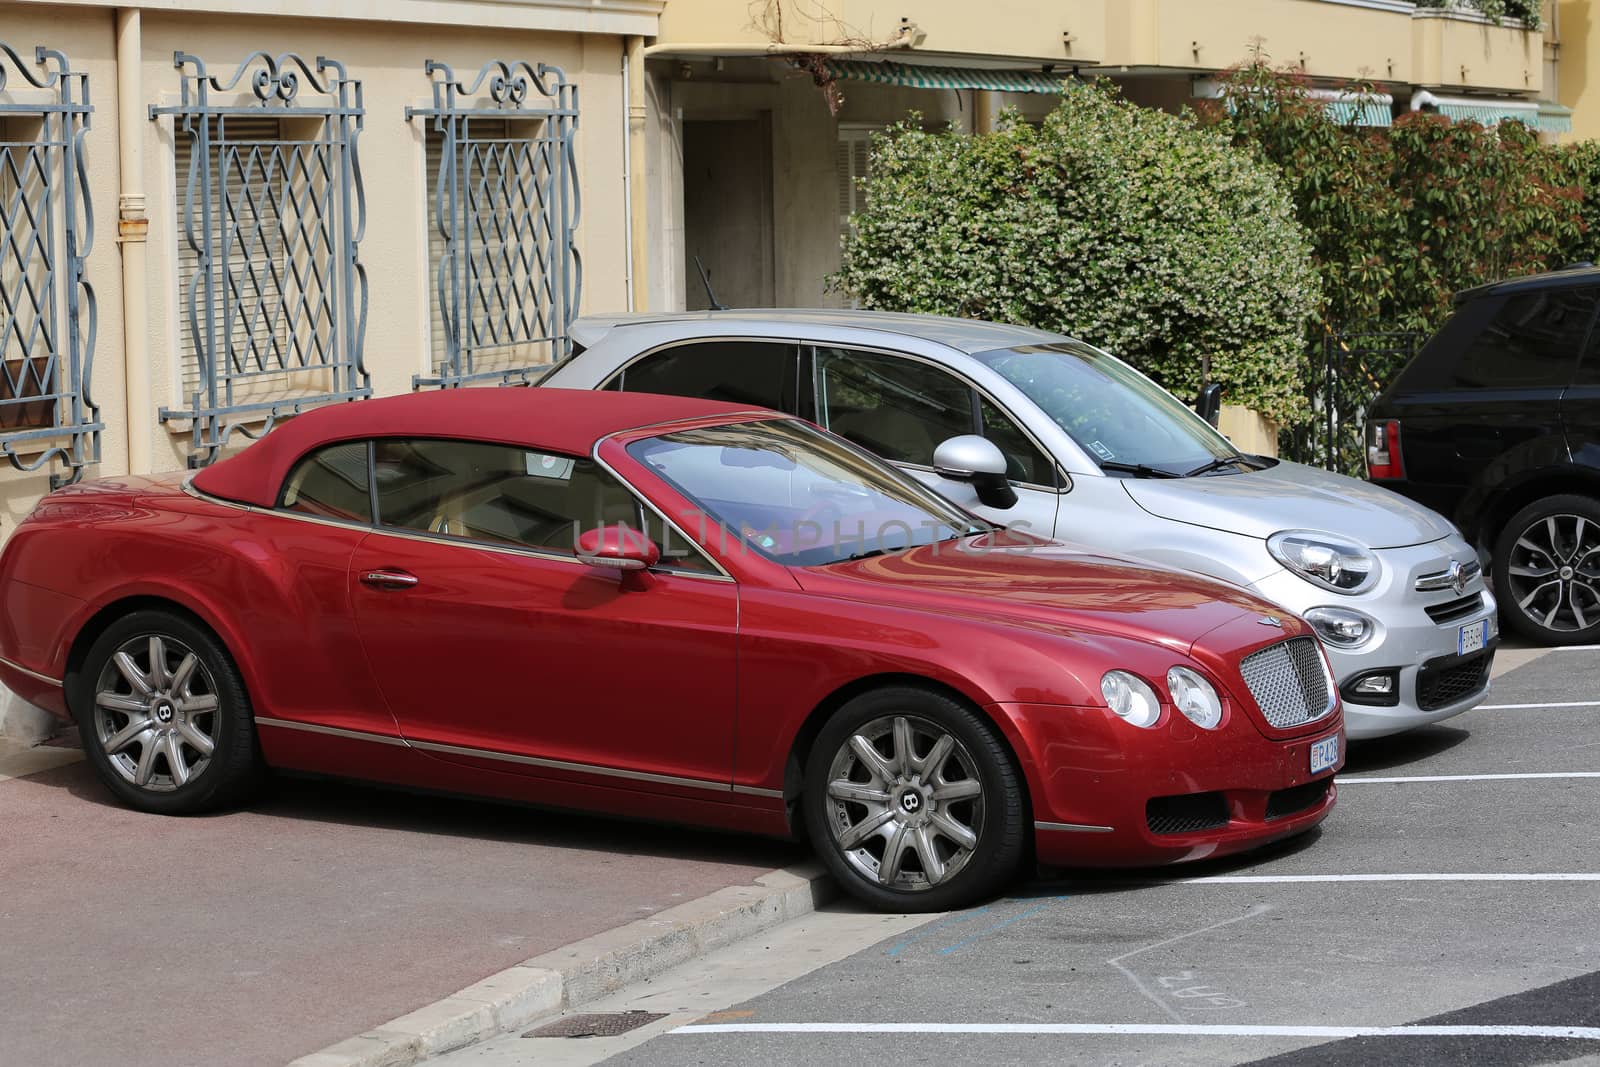 Monte-Carlo, Monaco - May 28, 2016: British Luxury Car Bentley Continental GTC Badly Parked on the Sidewalk in Monaco